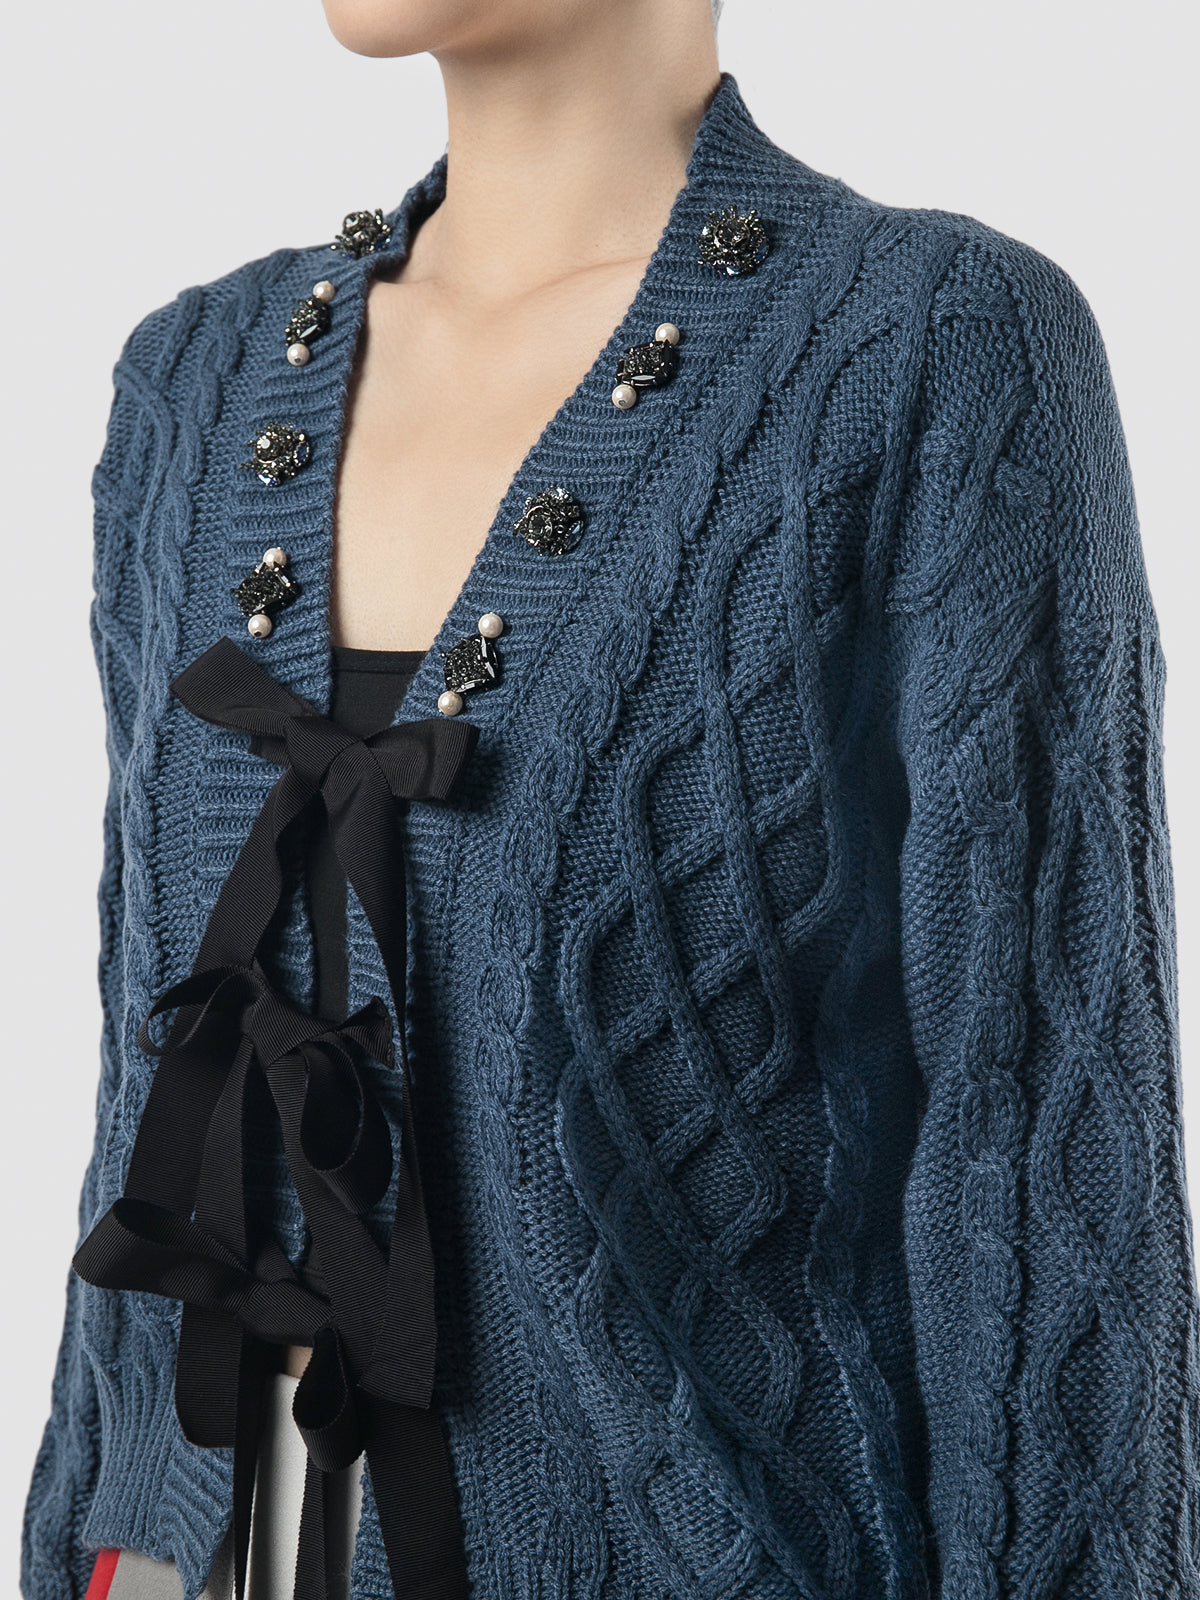 Skyler blue knitted cardigan